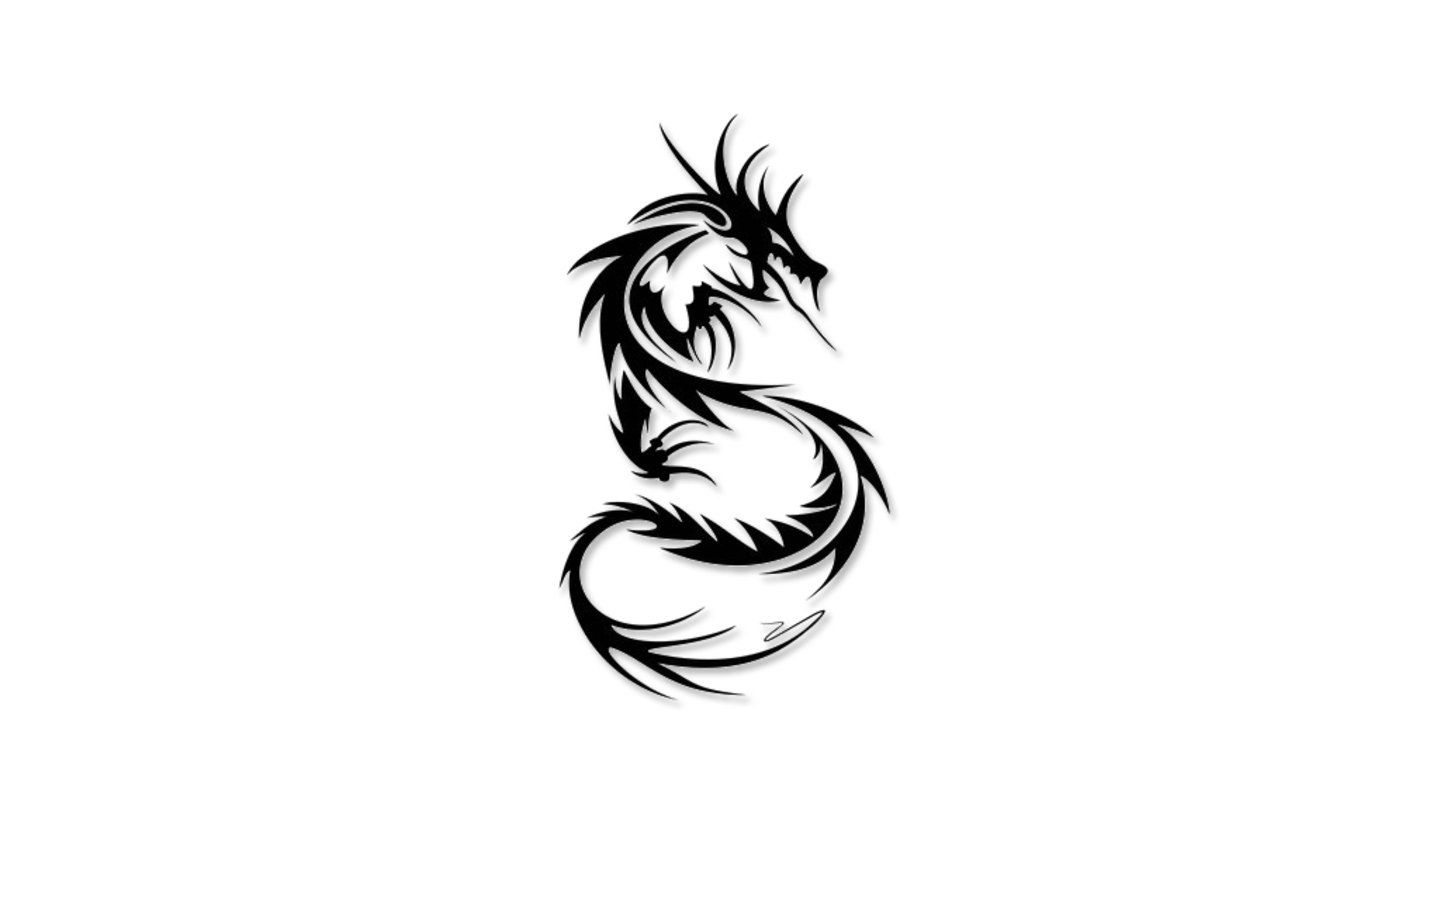 Cool Dragons Symbols Wallpapers Wallpapers